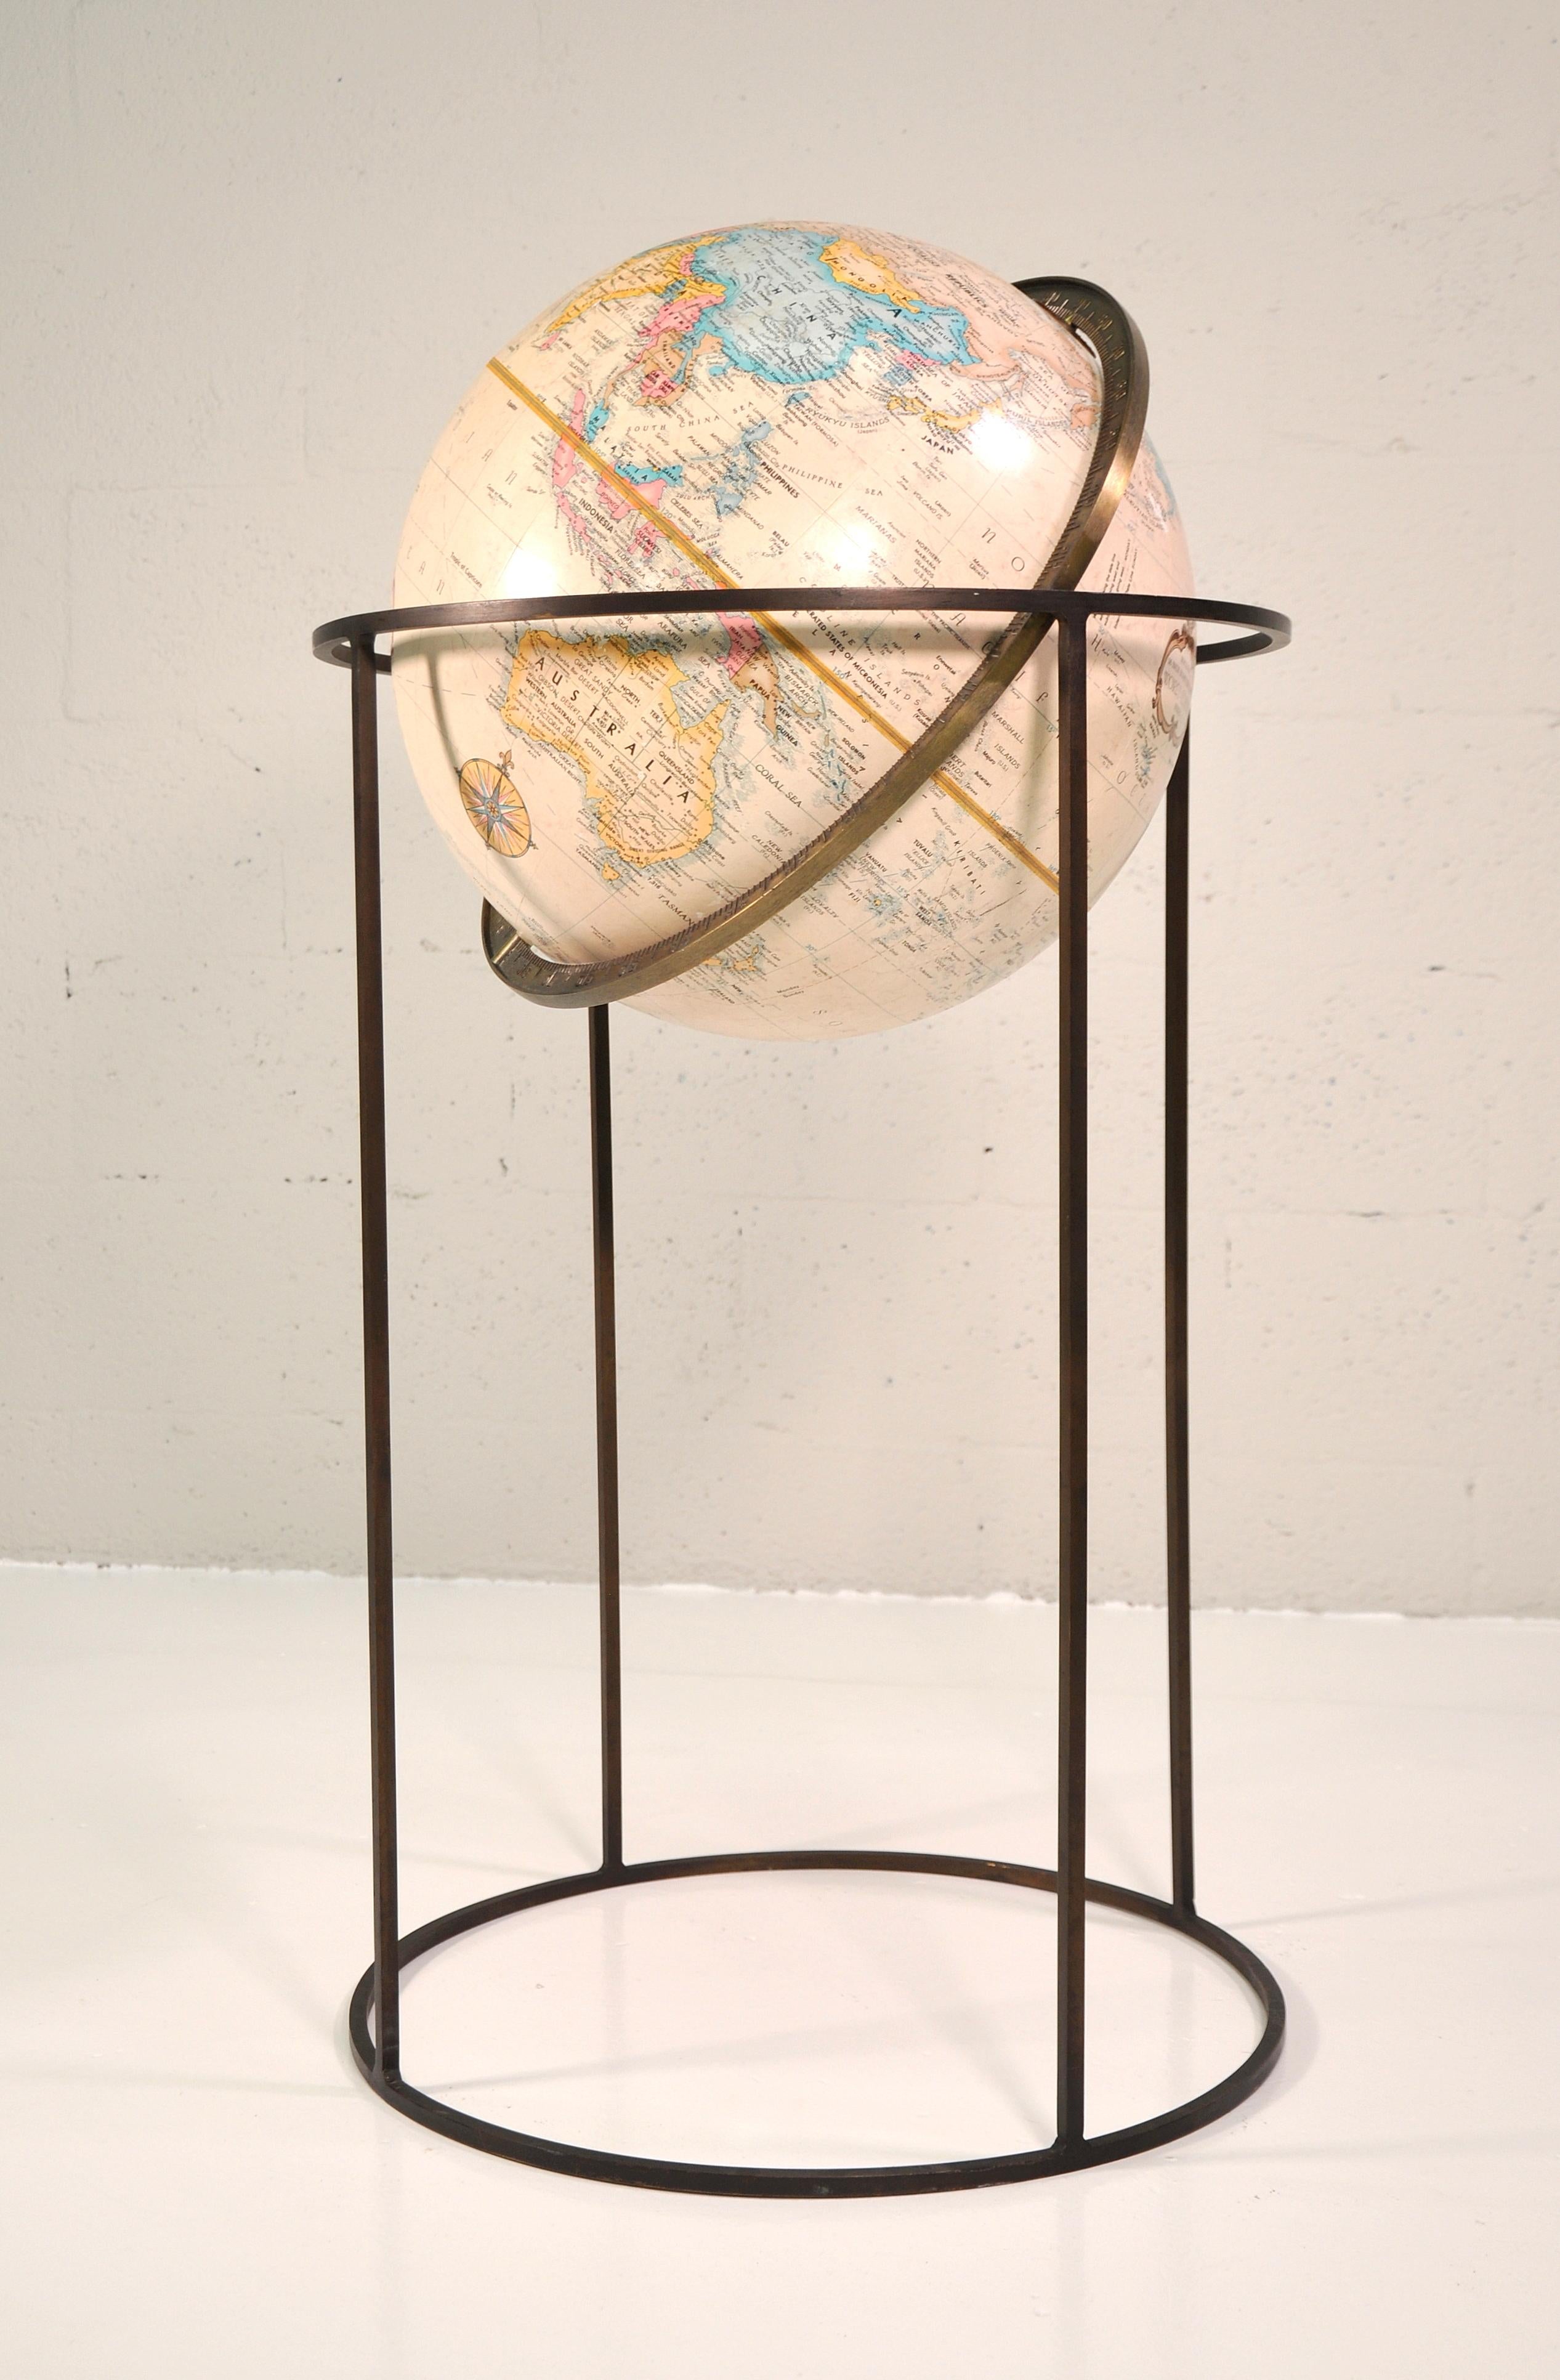 World Globe in the Style of Paul McCobb 2